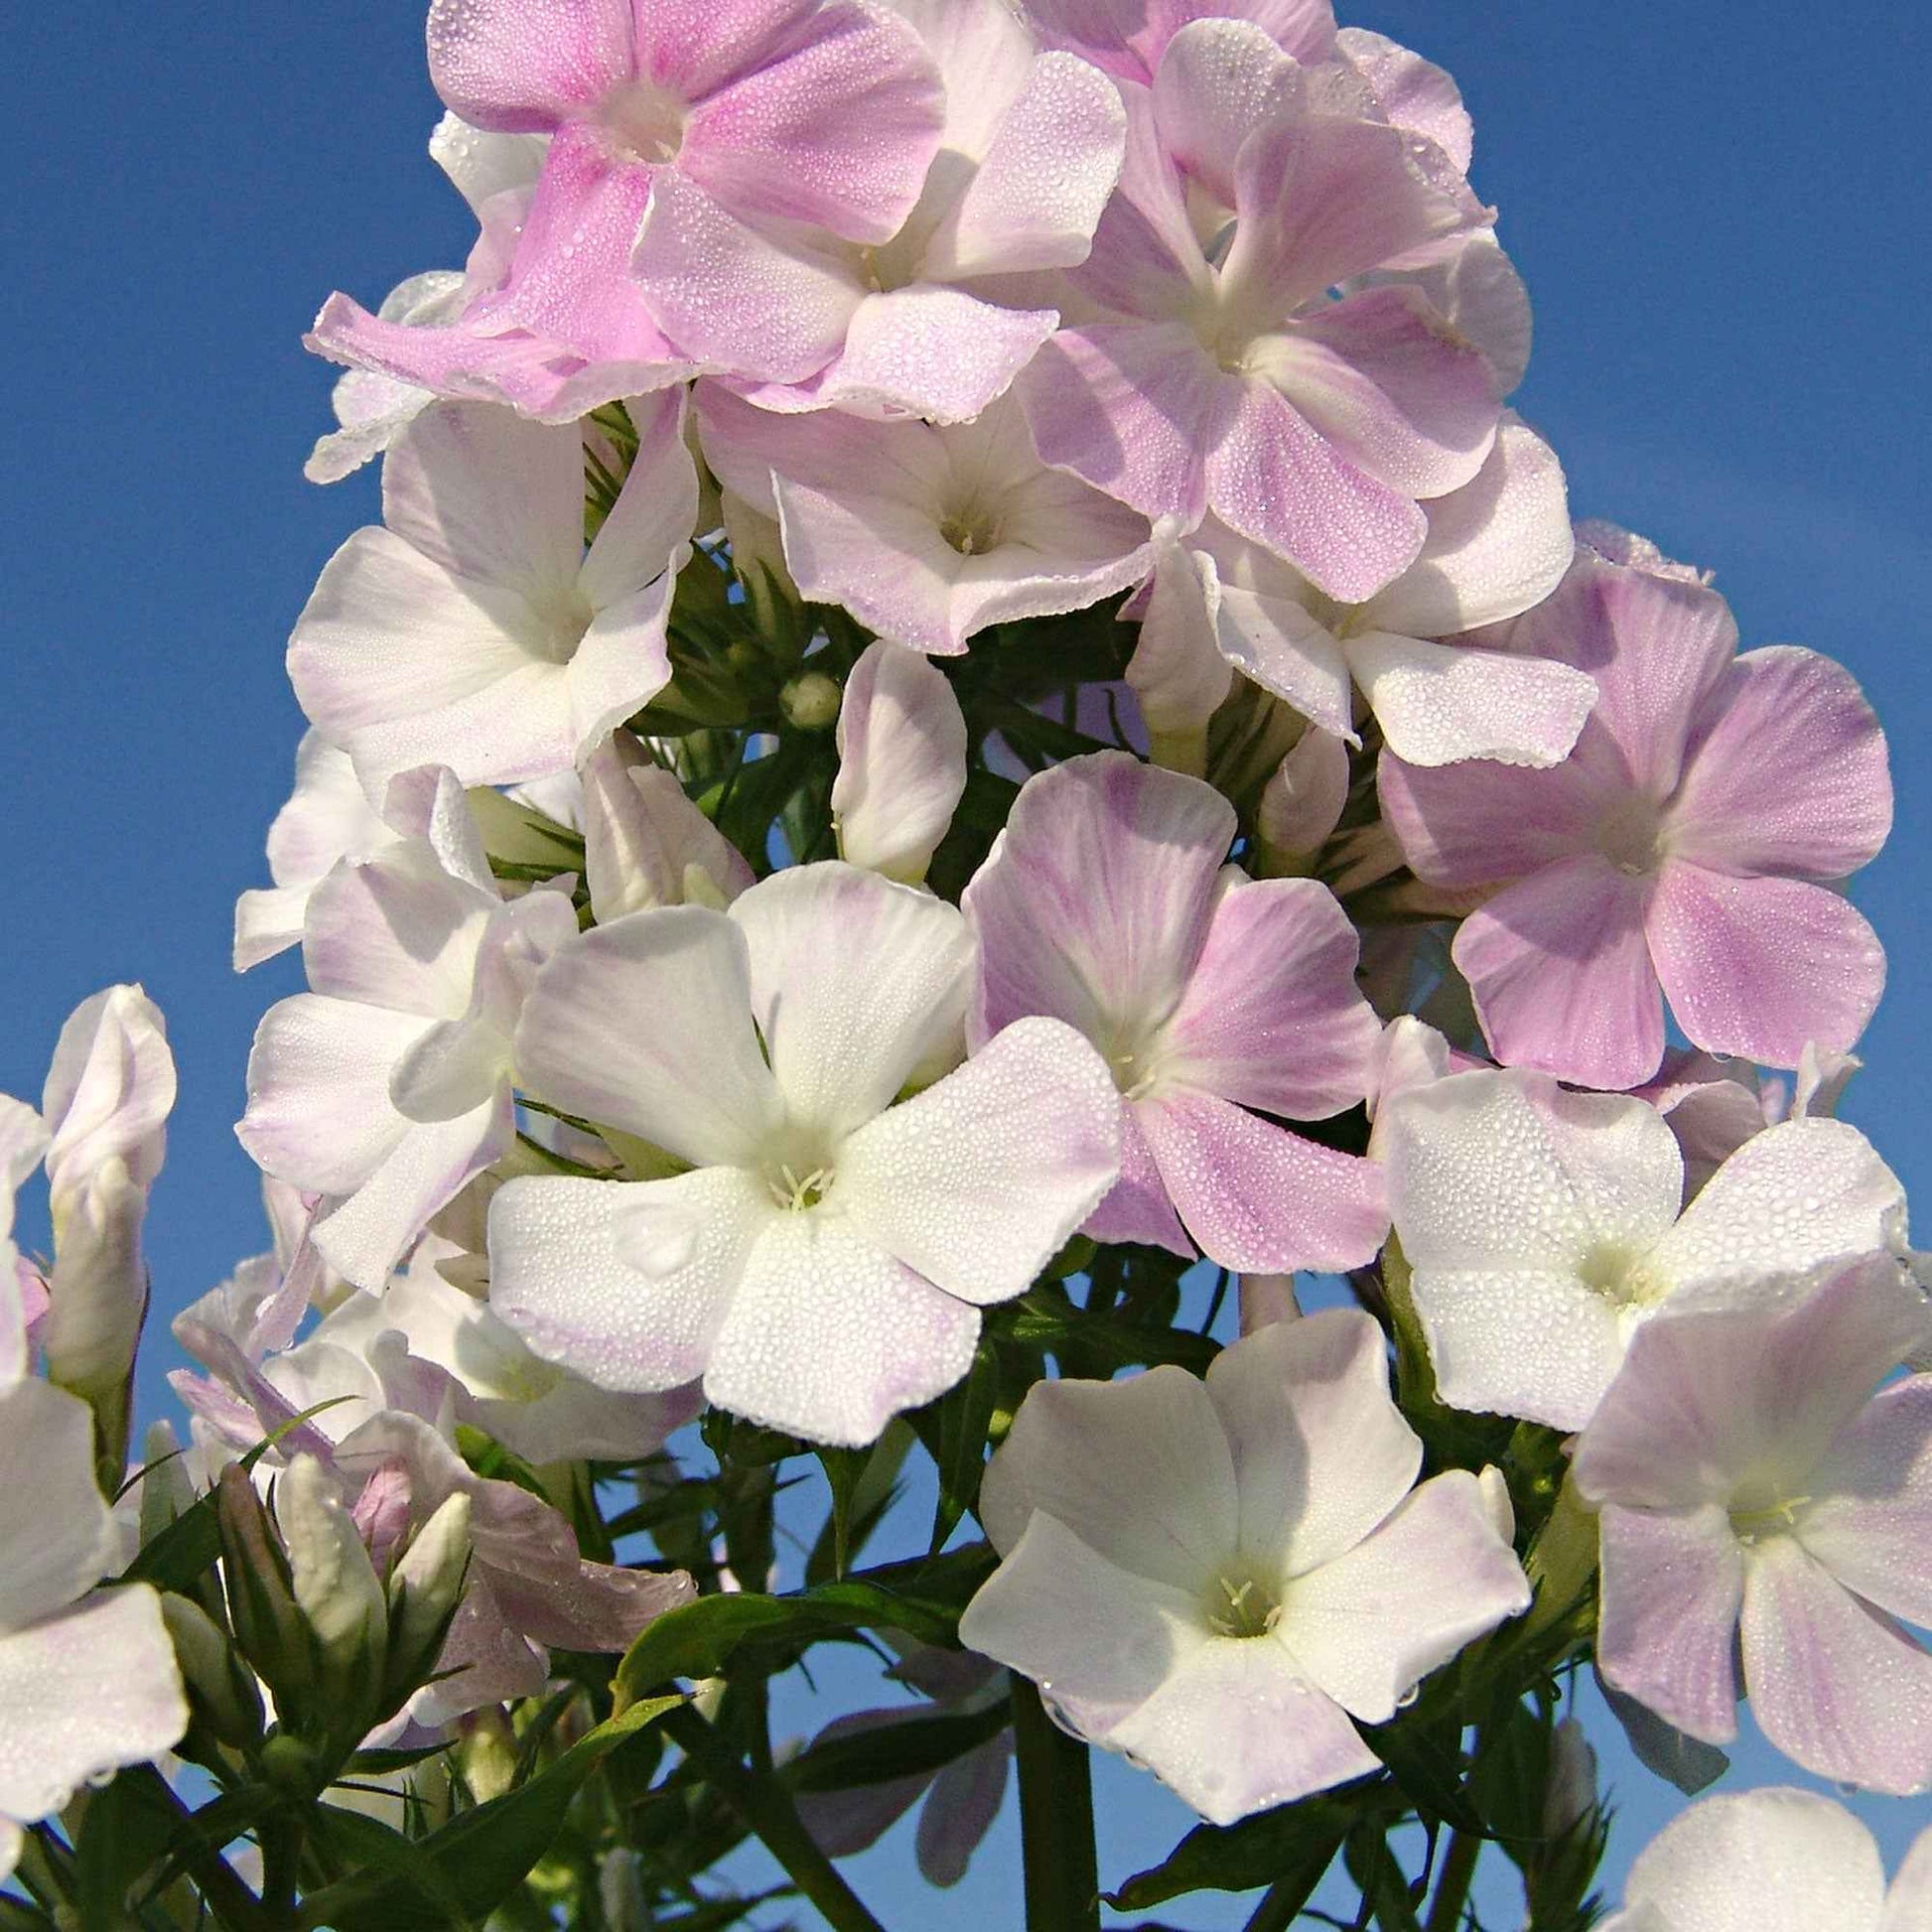 3x Vlambloem Phlox 'Cool Water' roze-wit - Bare rooted - Plant eigenschap